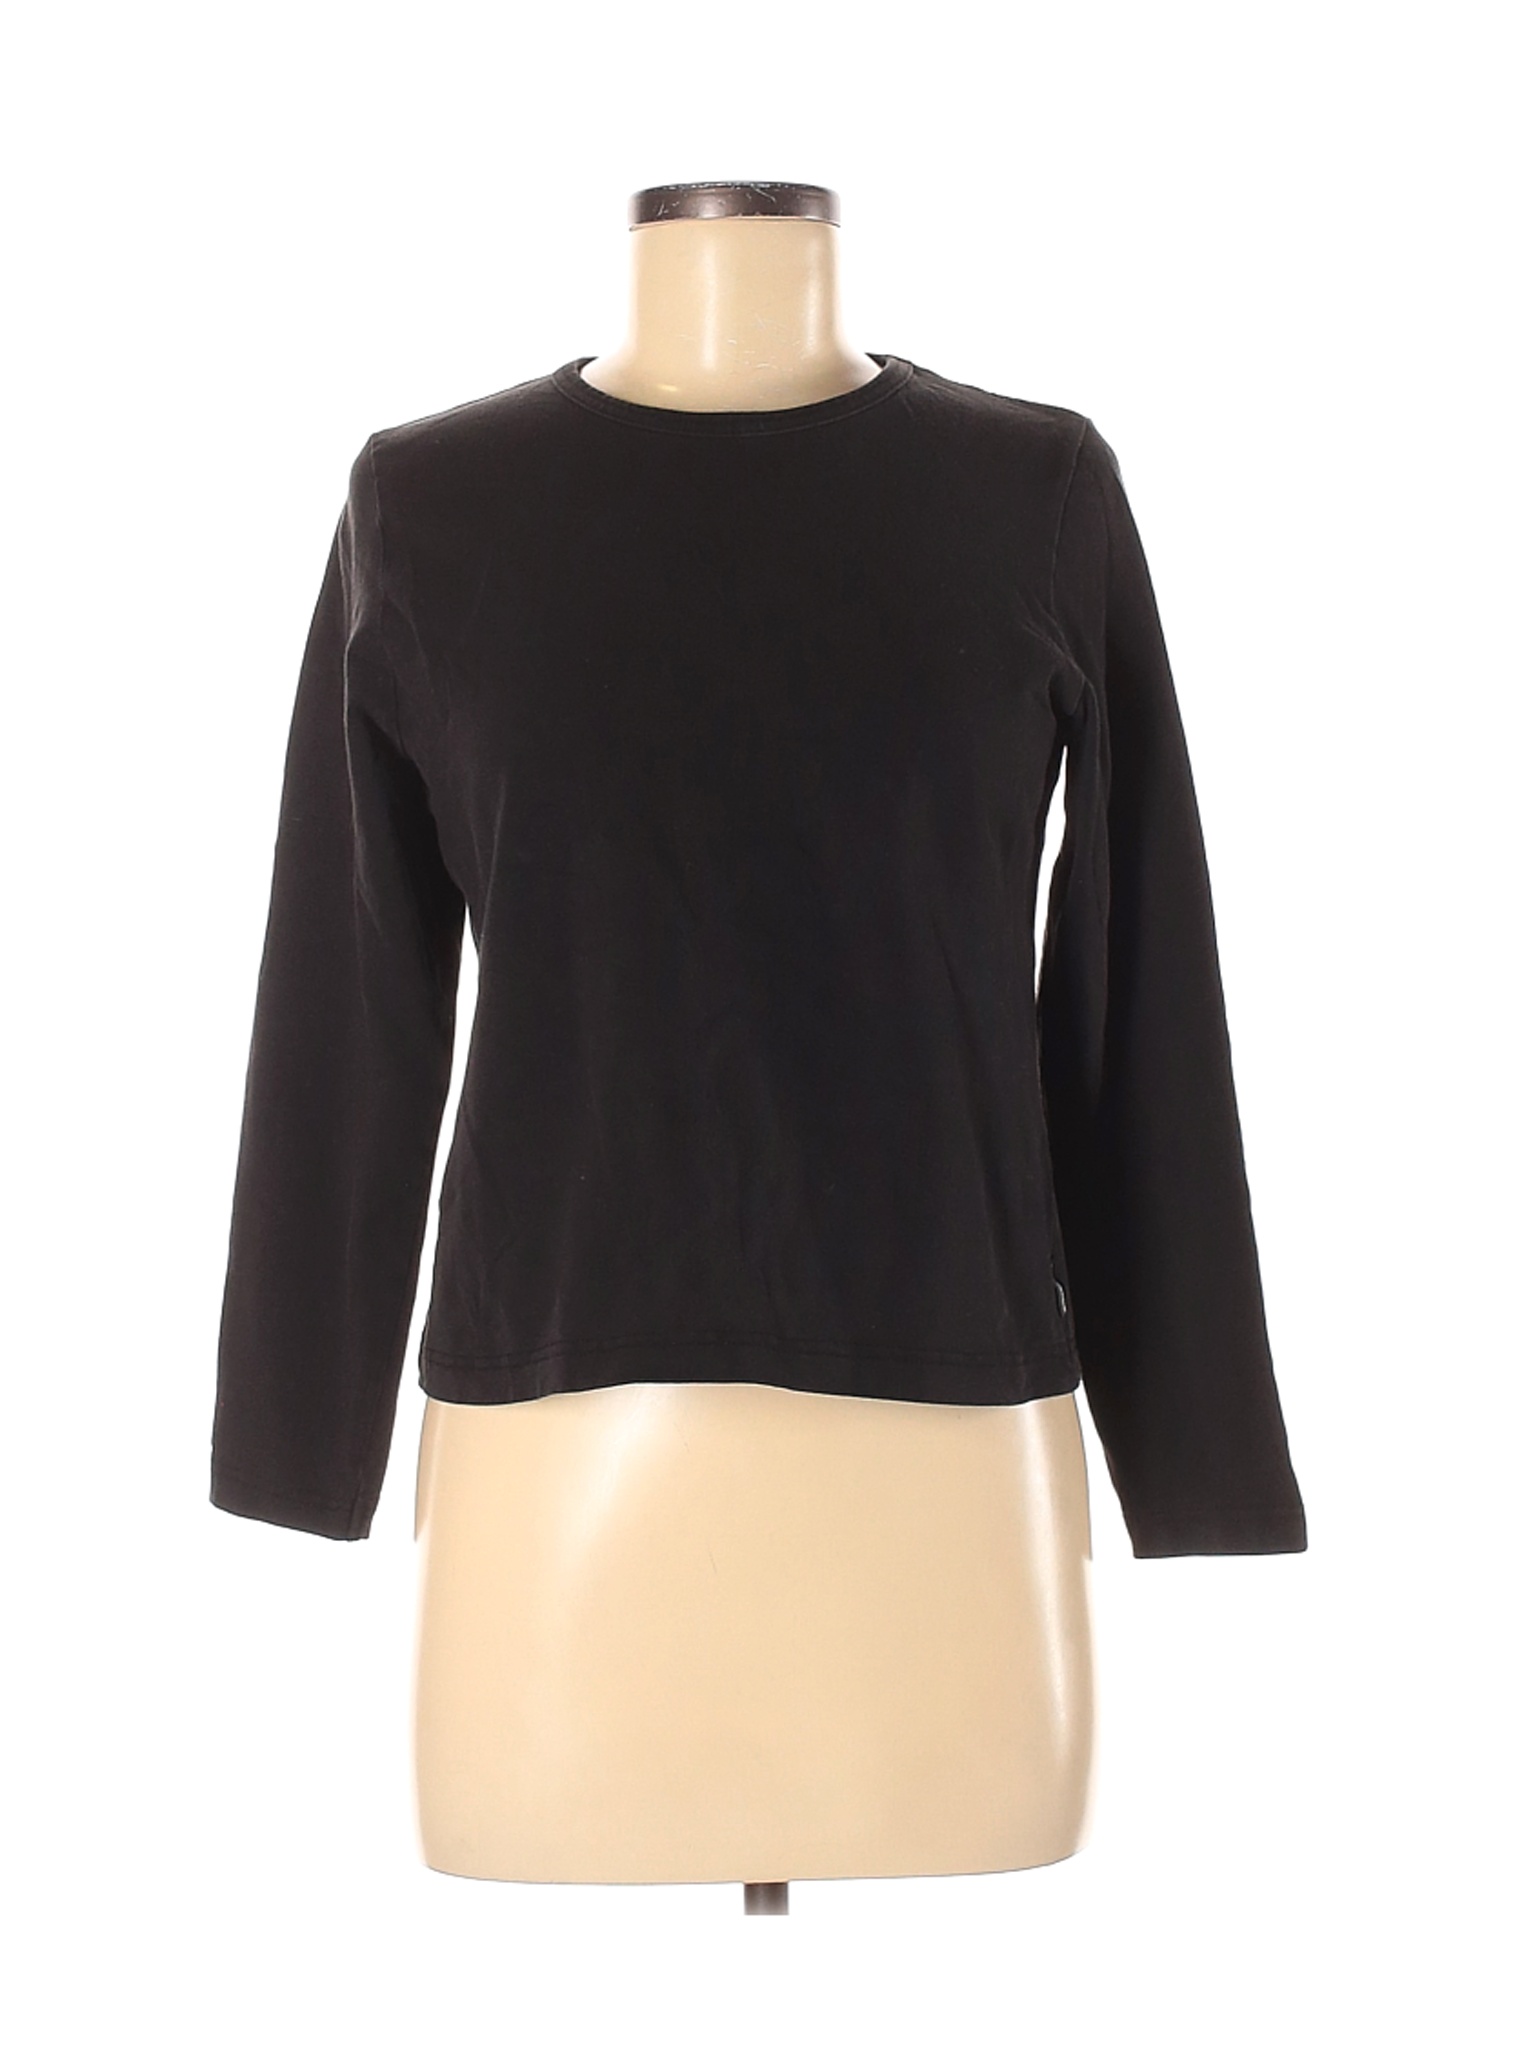 Woolrich Women Black 3/4 Sleeve T-Shirt M Petites | eBay